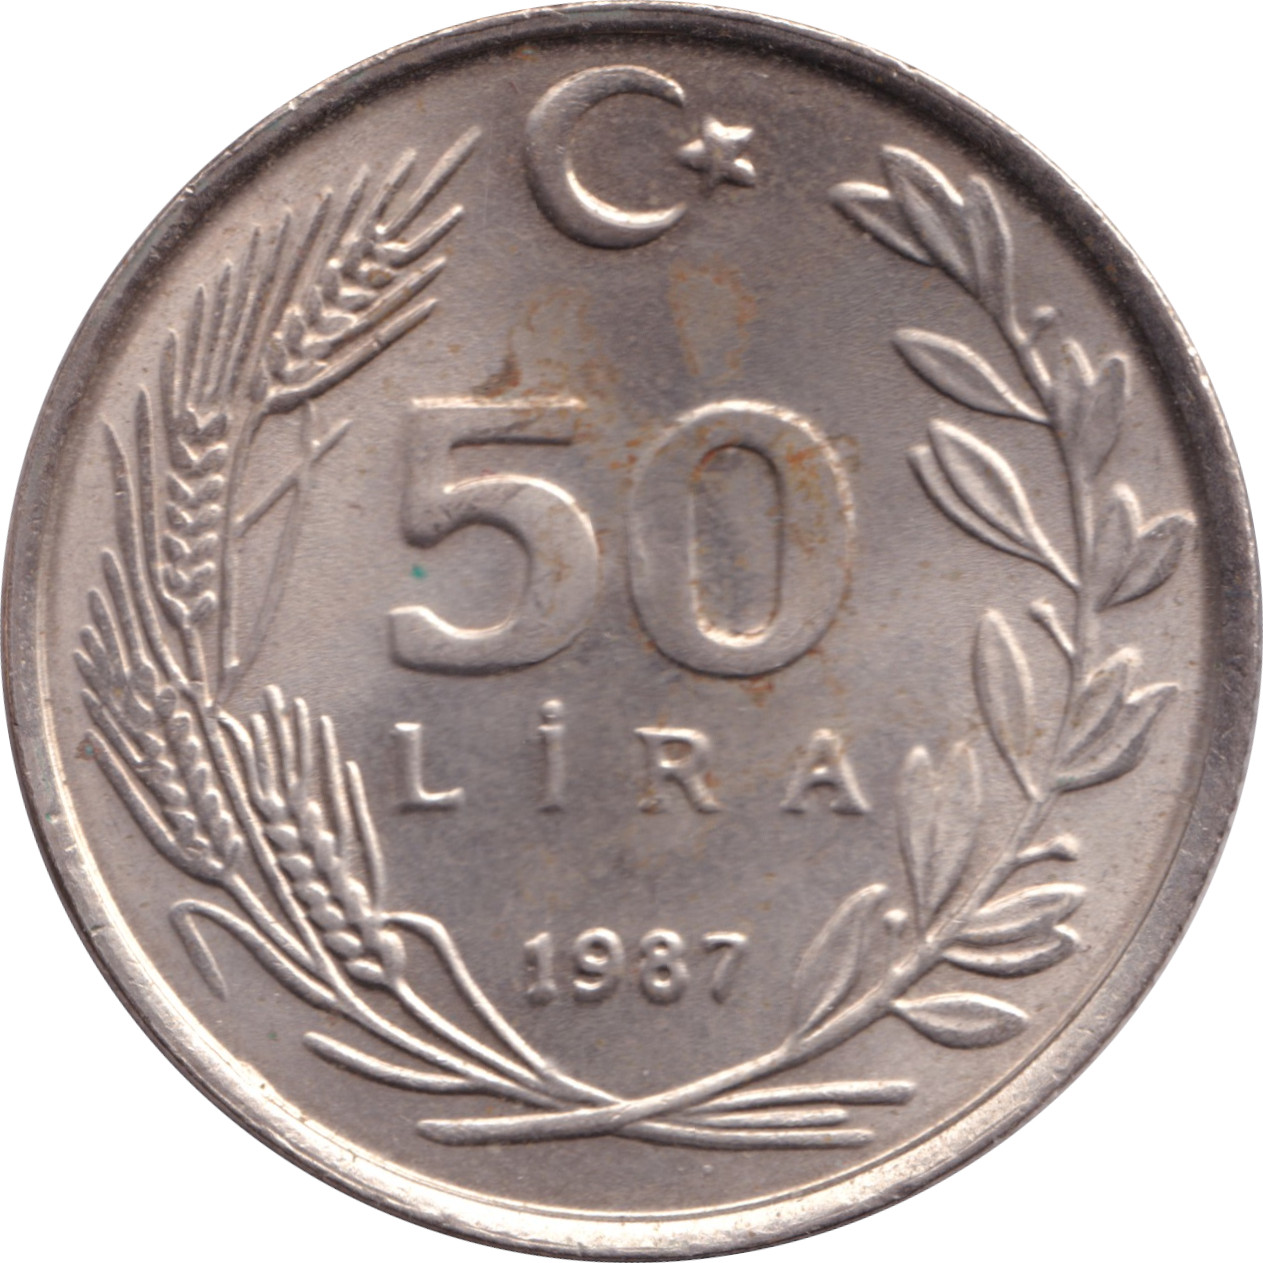 50 lira - Moustafa Kemal - Type 1